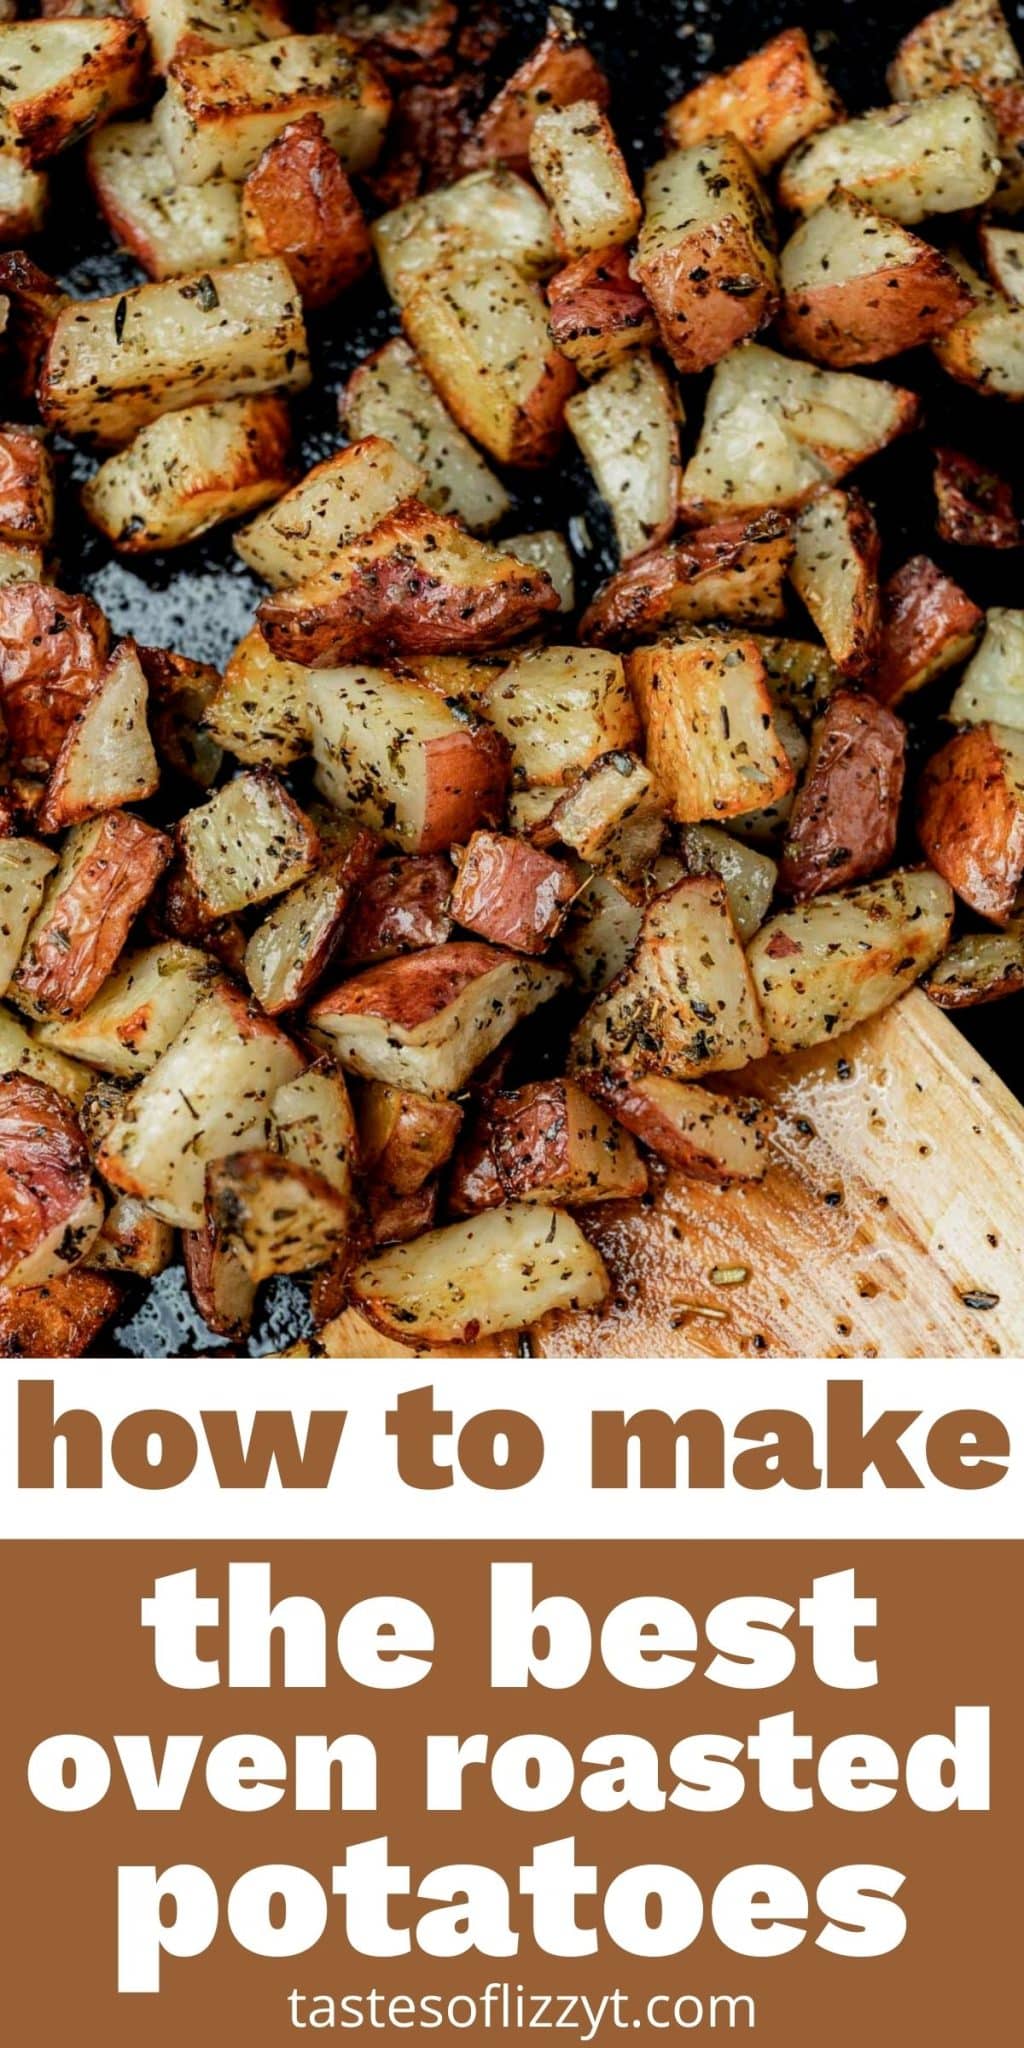 https://www.tastesoflizzyt.com/wp-content/uploads/2018/09/oven-roasted-potatoes-pin-scaled.jpg